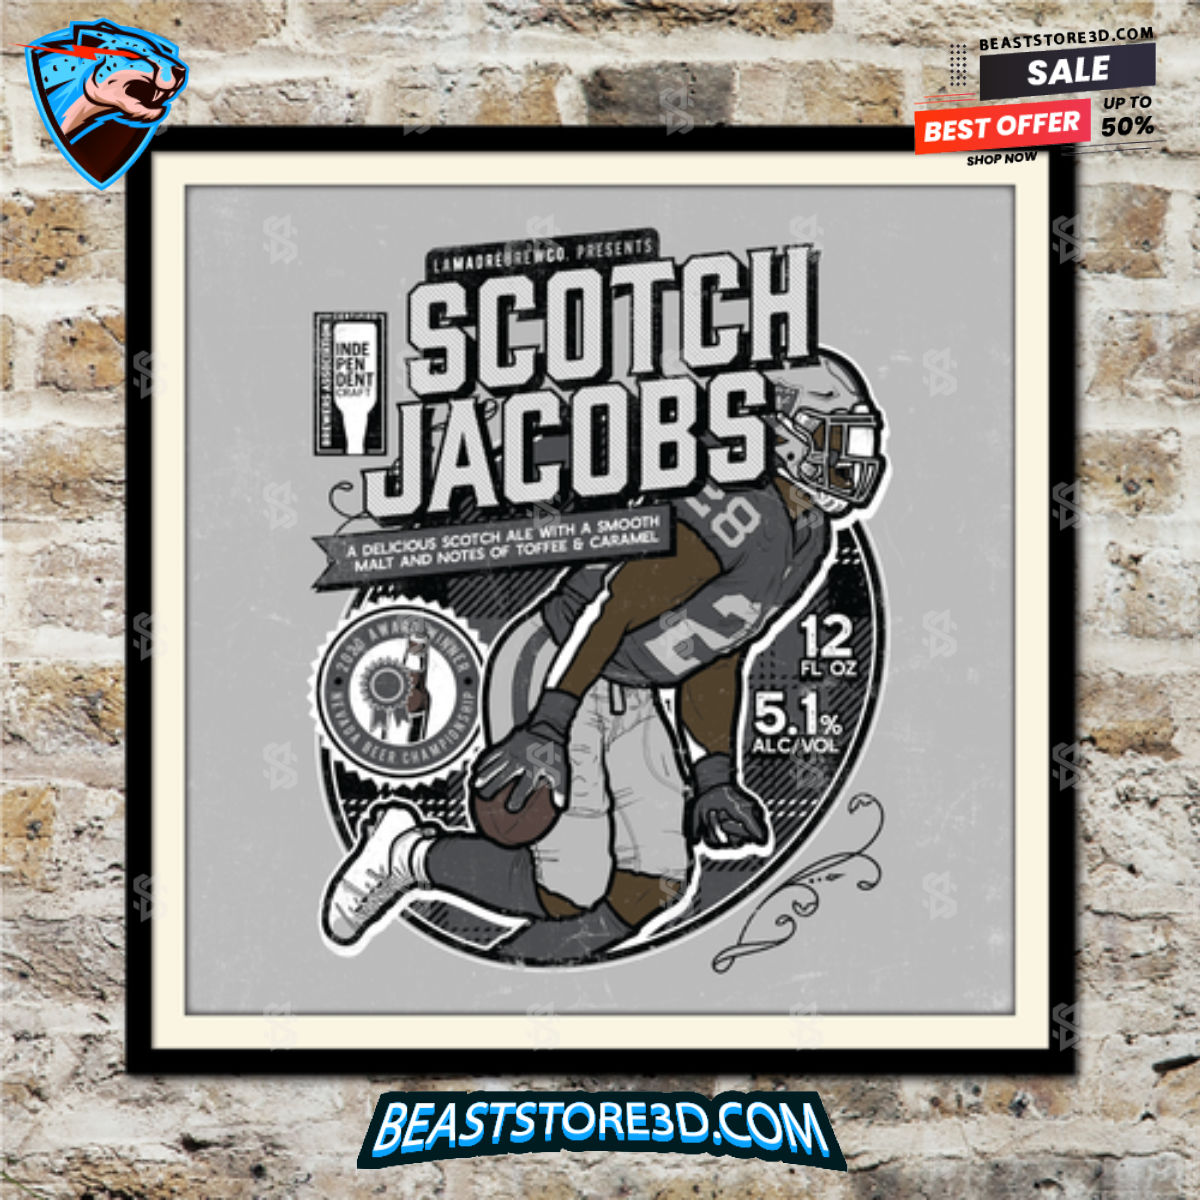 Josh Jacobs Las Vegas Raiders Fake Craft Beer Label Print 1697116494294 esvvo.jpg